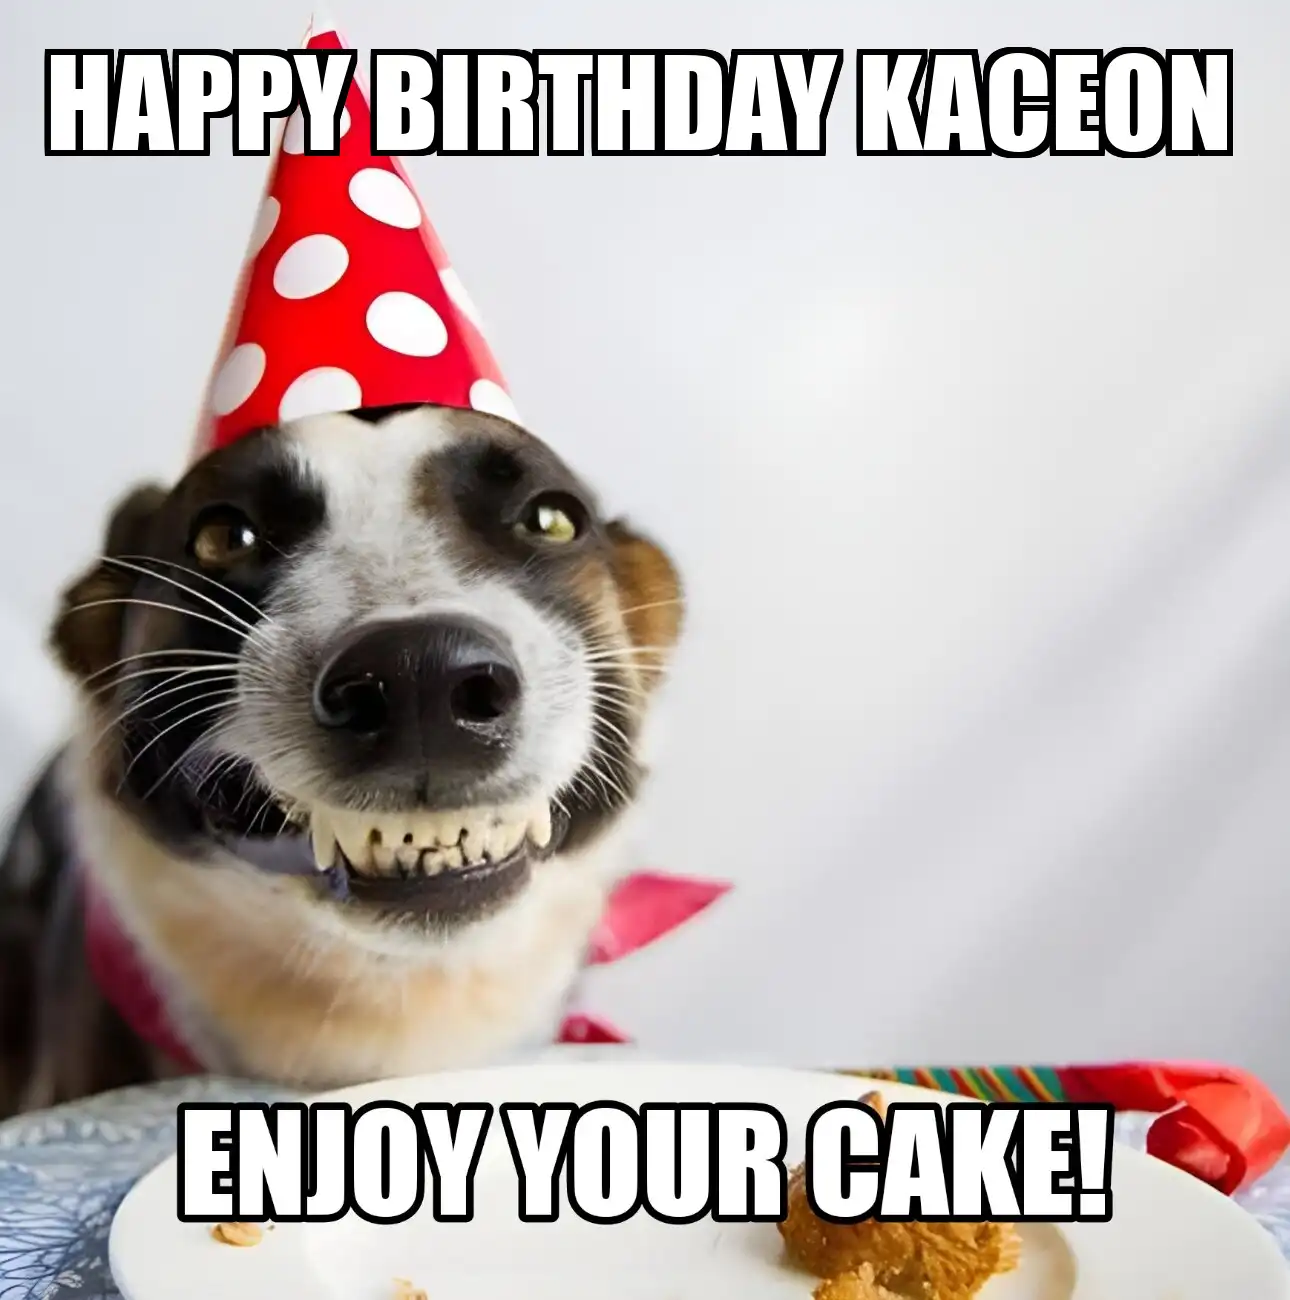 Happy Birthday Kaceon Enjoy Your Cake Dog Meme